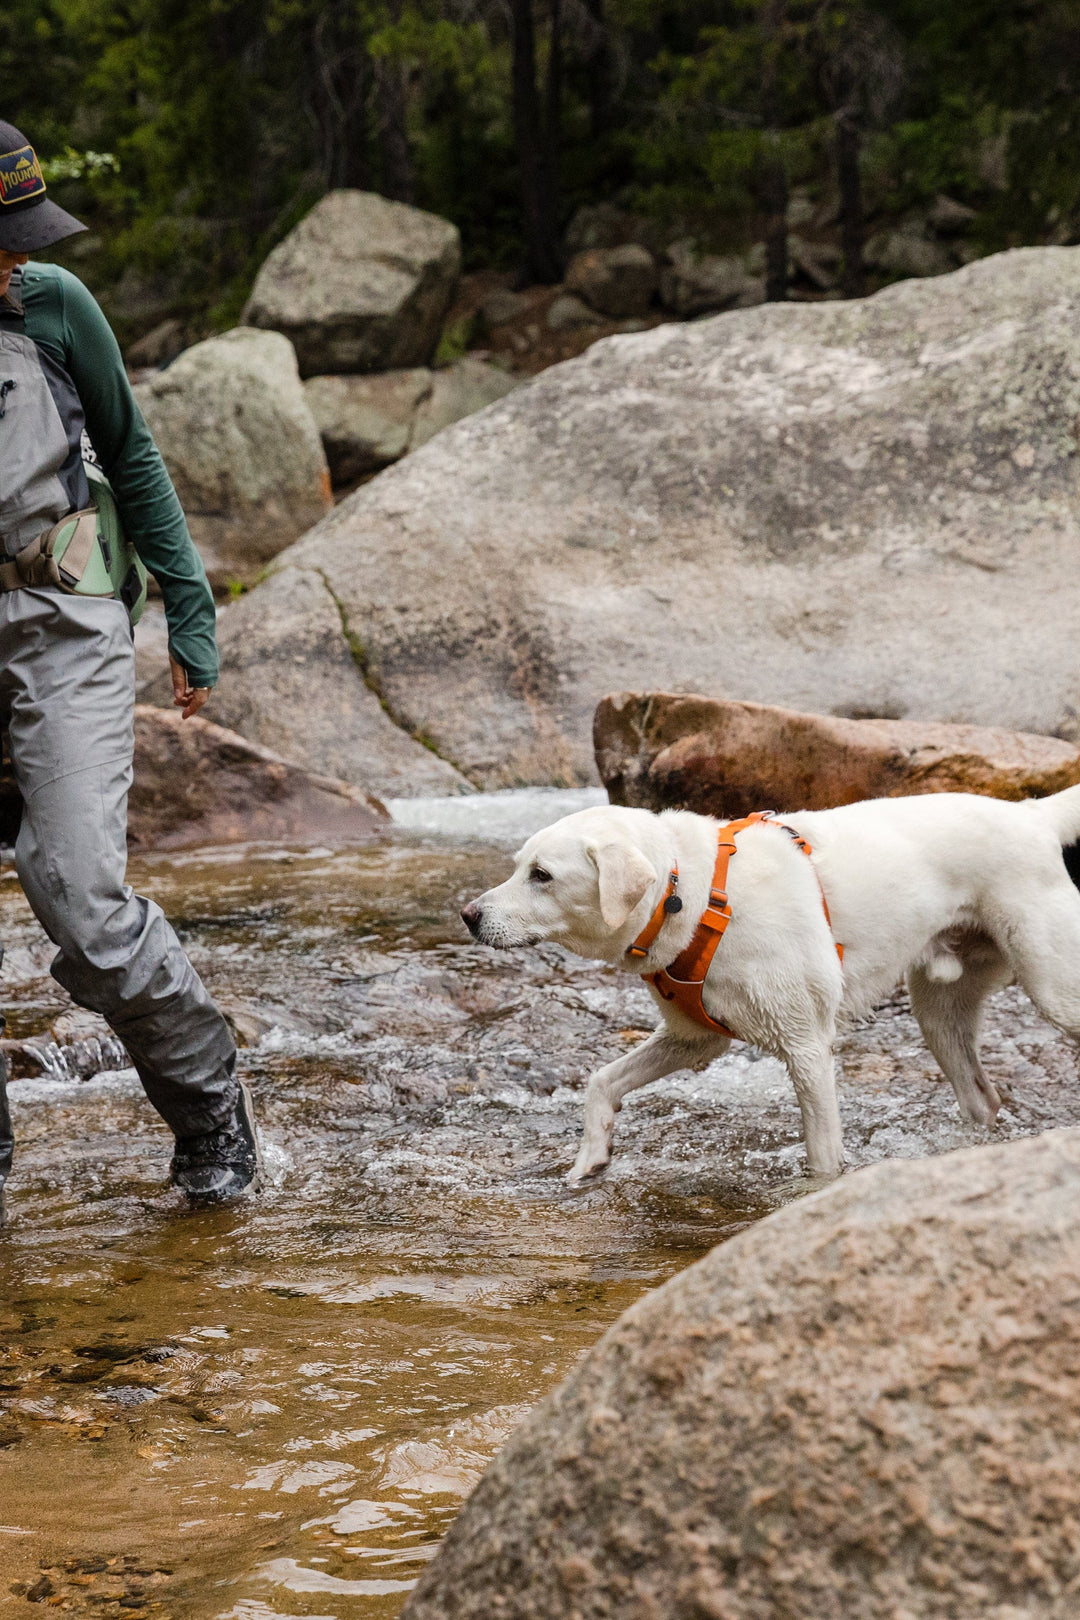 Ruffwear Front Range Dog Harness: Campfire Orange, Durable and Adjustable